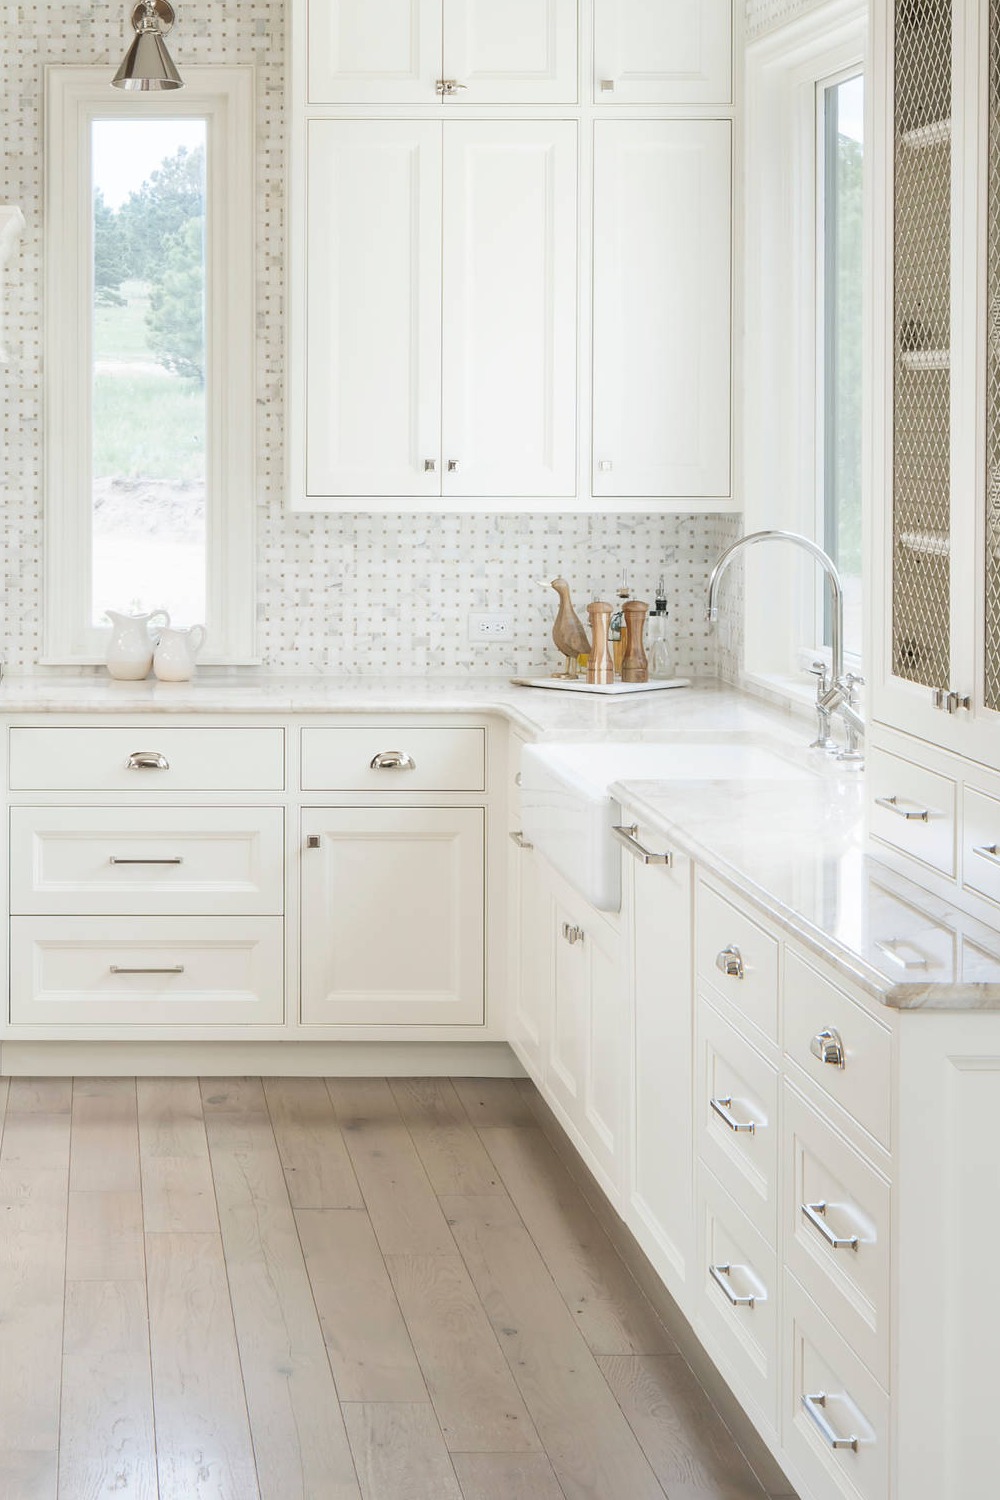 White Mosaic Tile Backsplash Cabinets Beige Countertops Light Wood Floor Farmhouse Sink